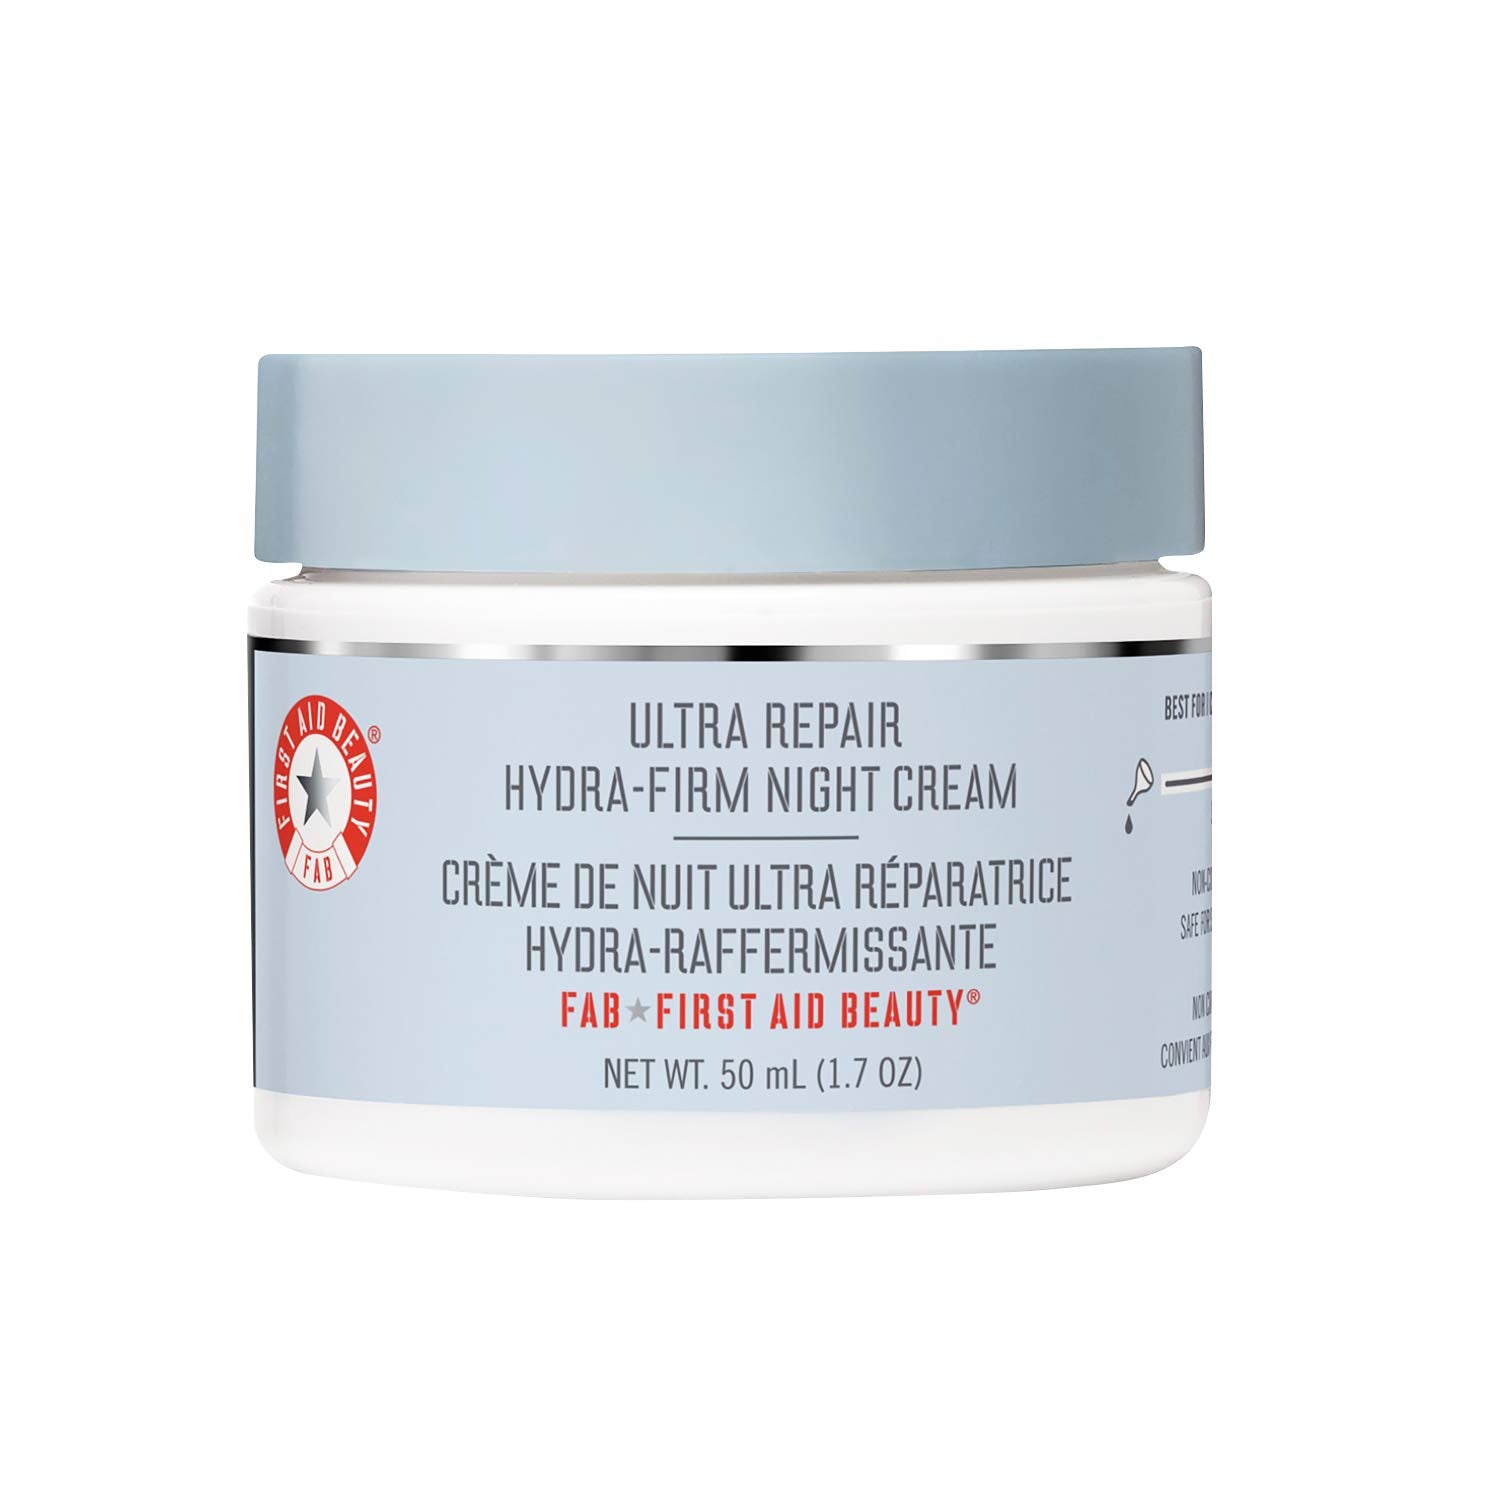 First Aid Beauty Ultra Repair Hydra-Firm Night Cream, Intense Nighttime Moisturizer – 1.7